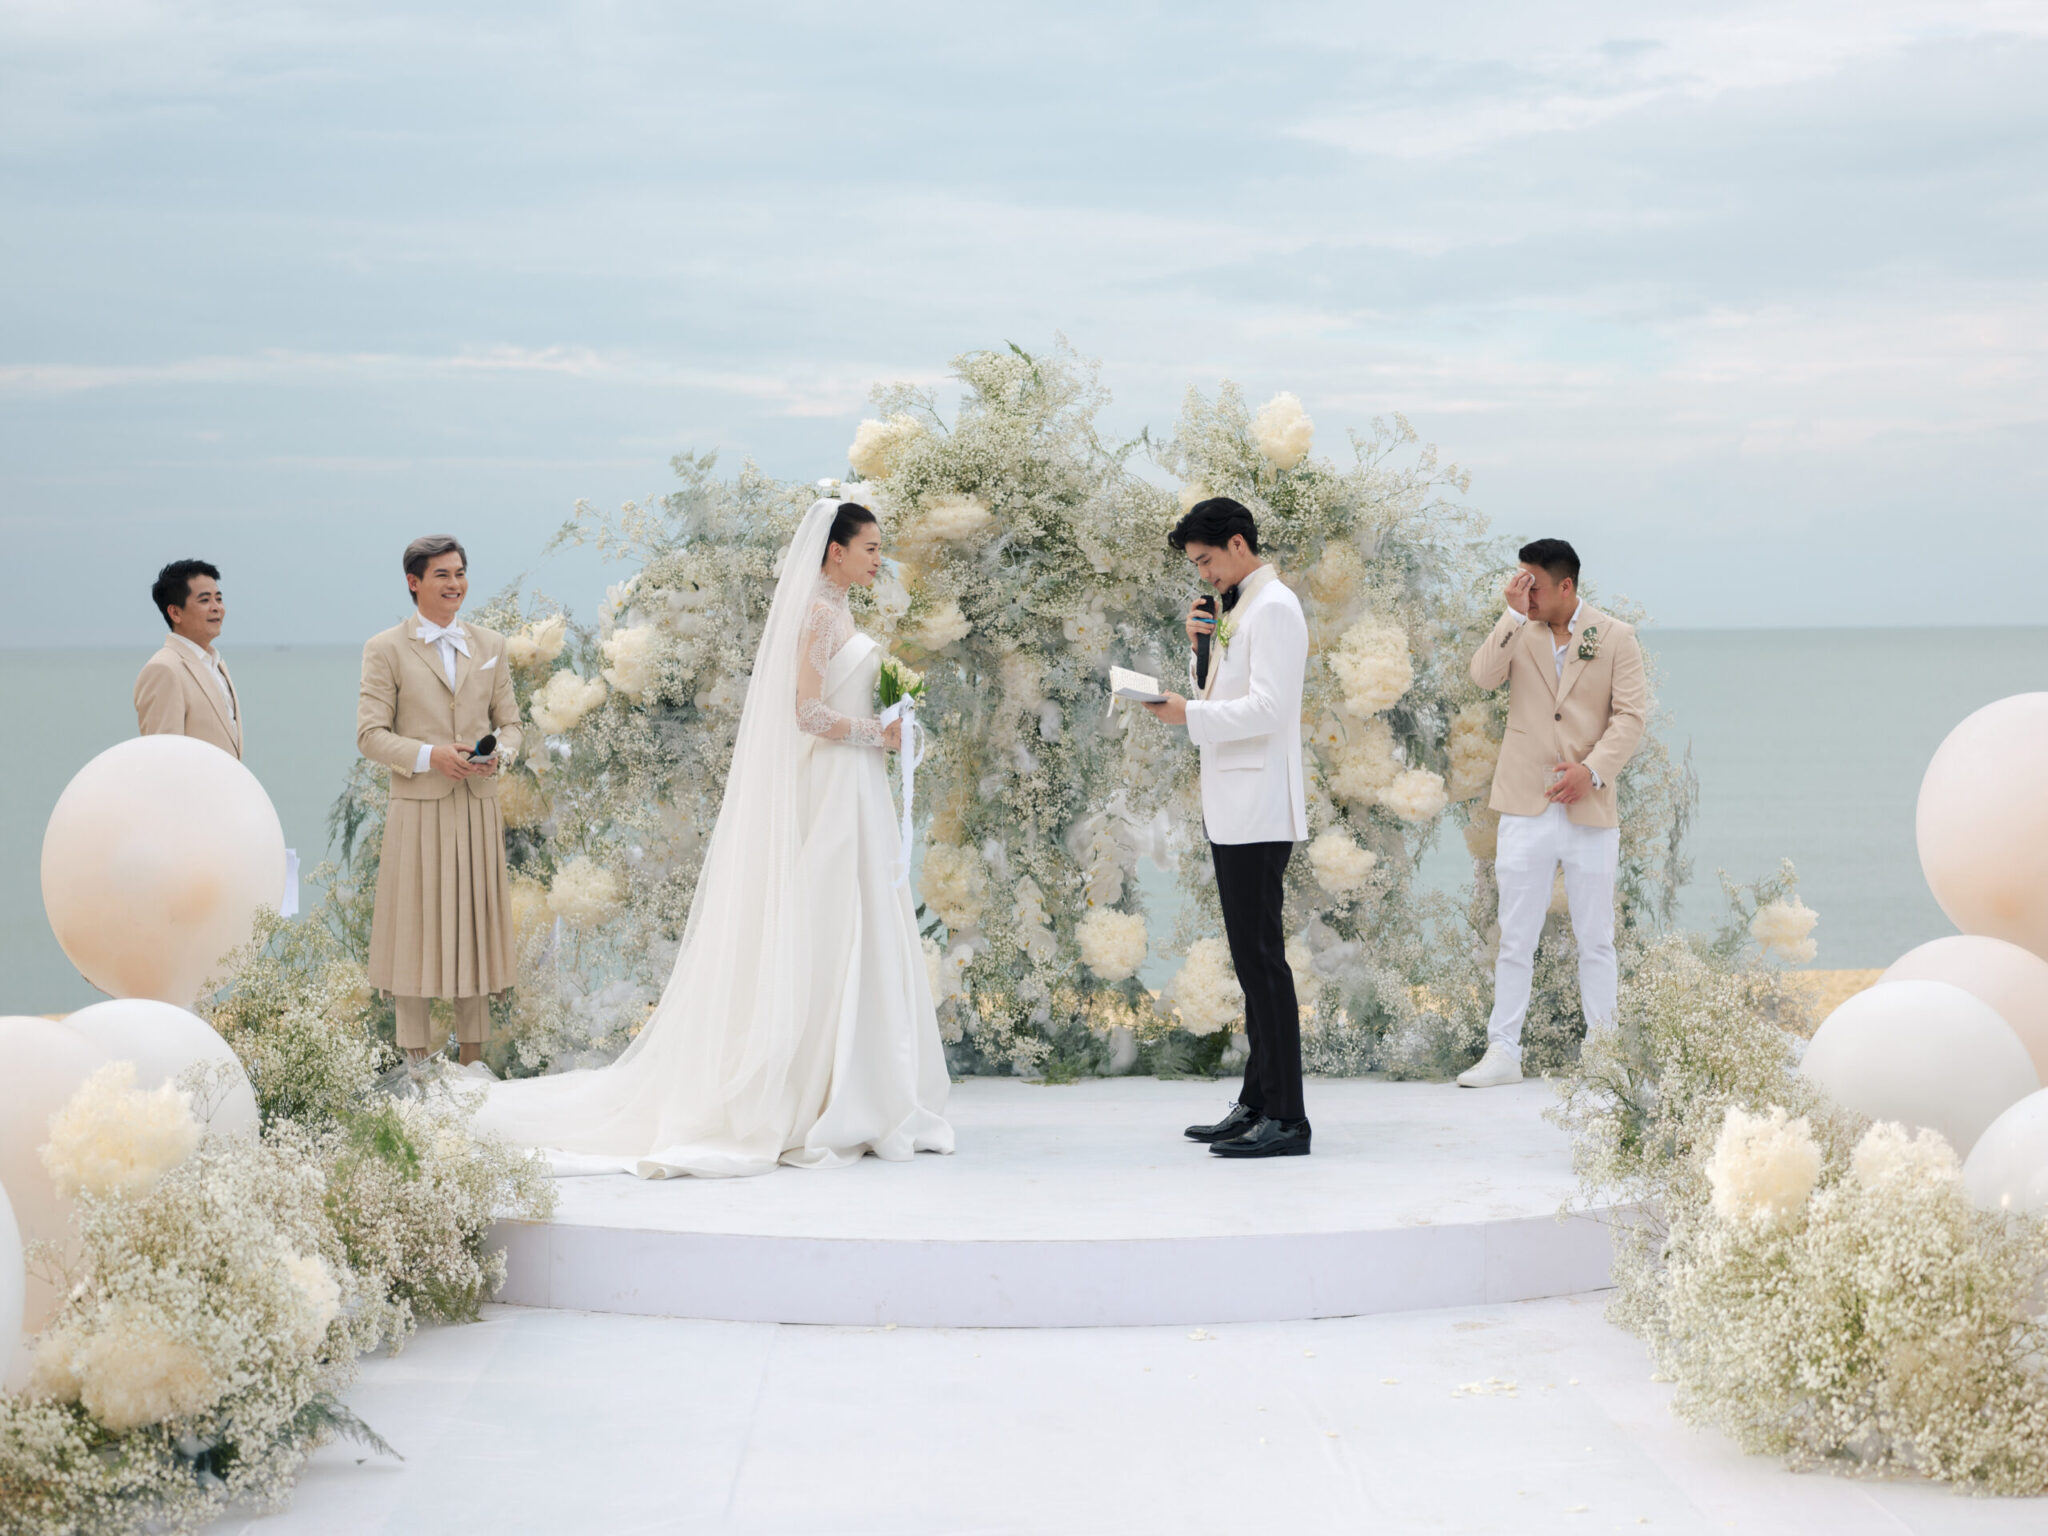 The wedding of Ngo Thanh Van and Huy Tran